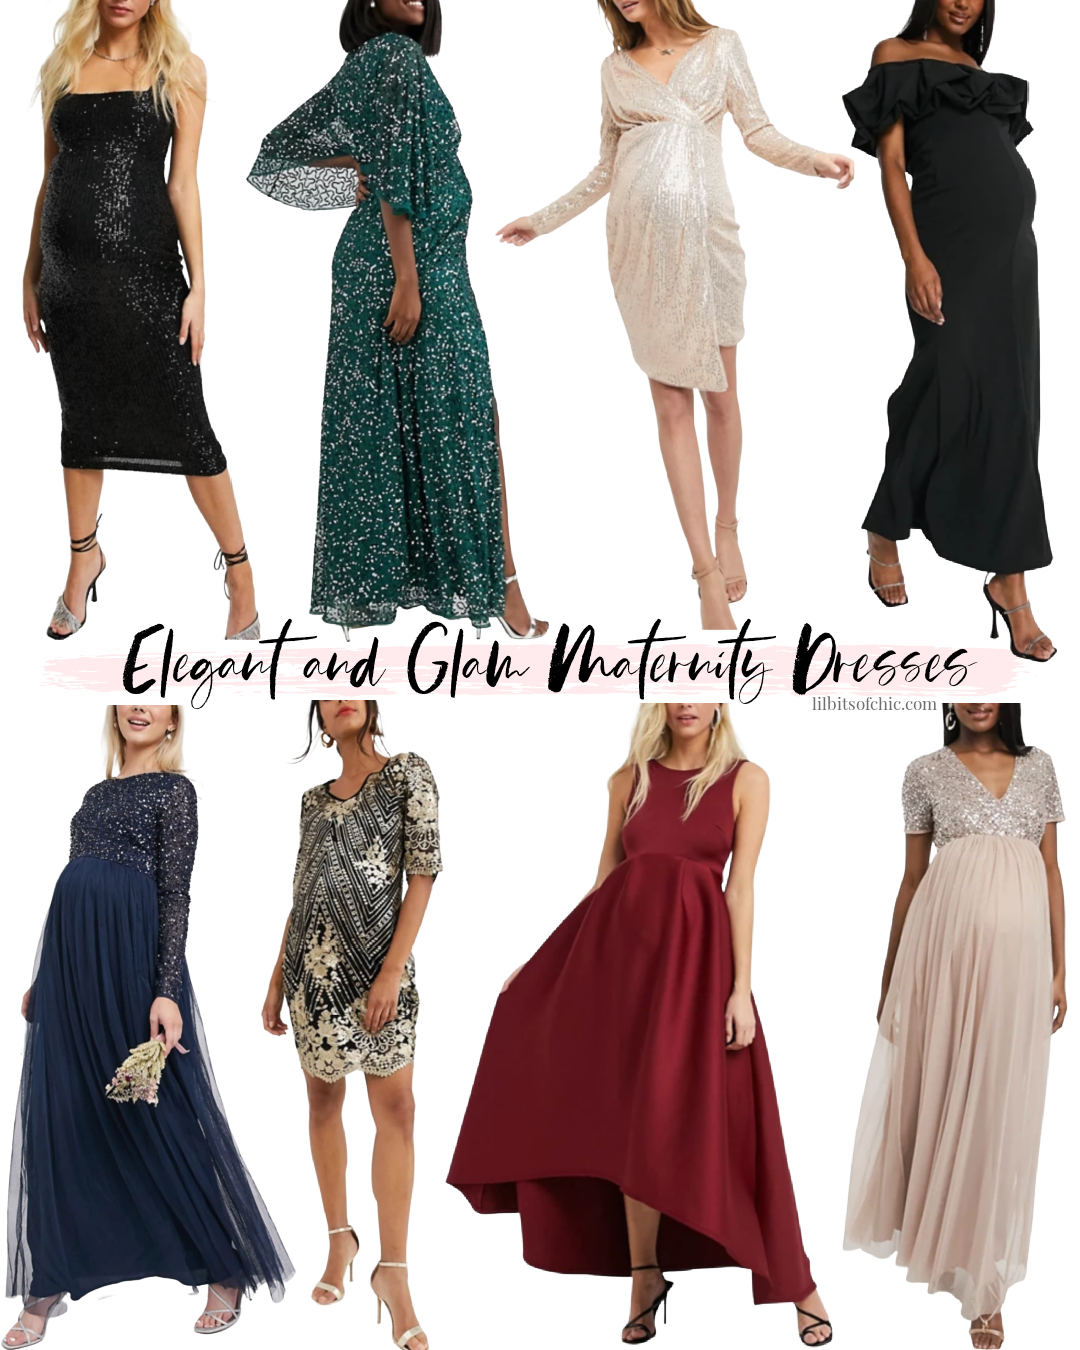 Elegant and Glam Maternity Dresses - Lil bits of Chic